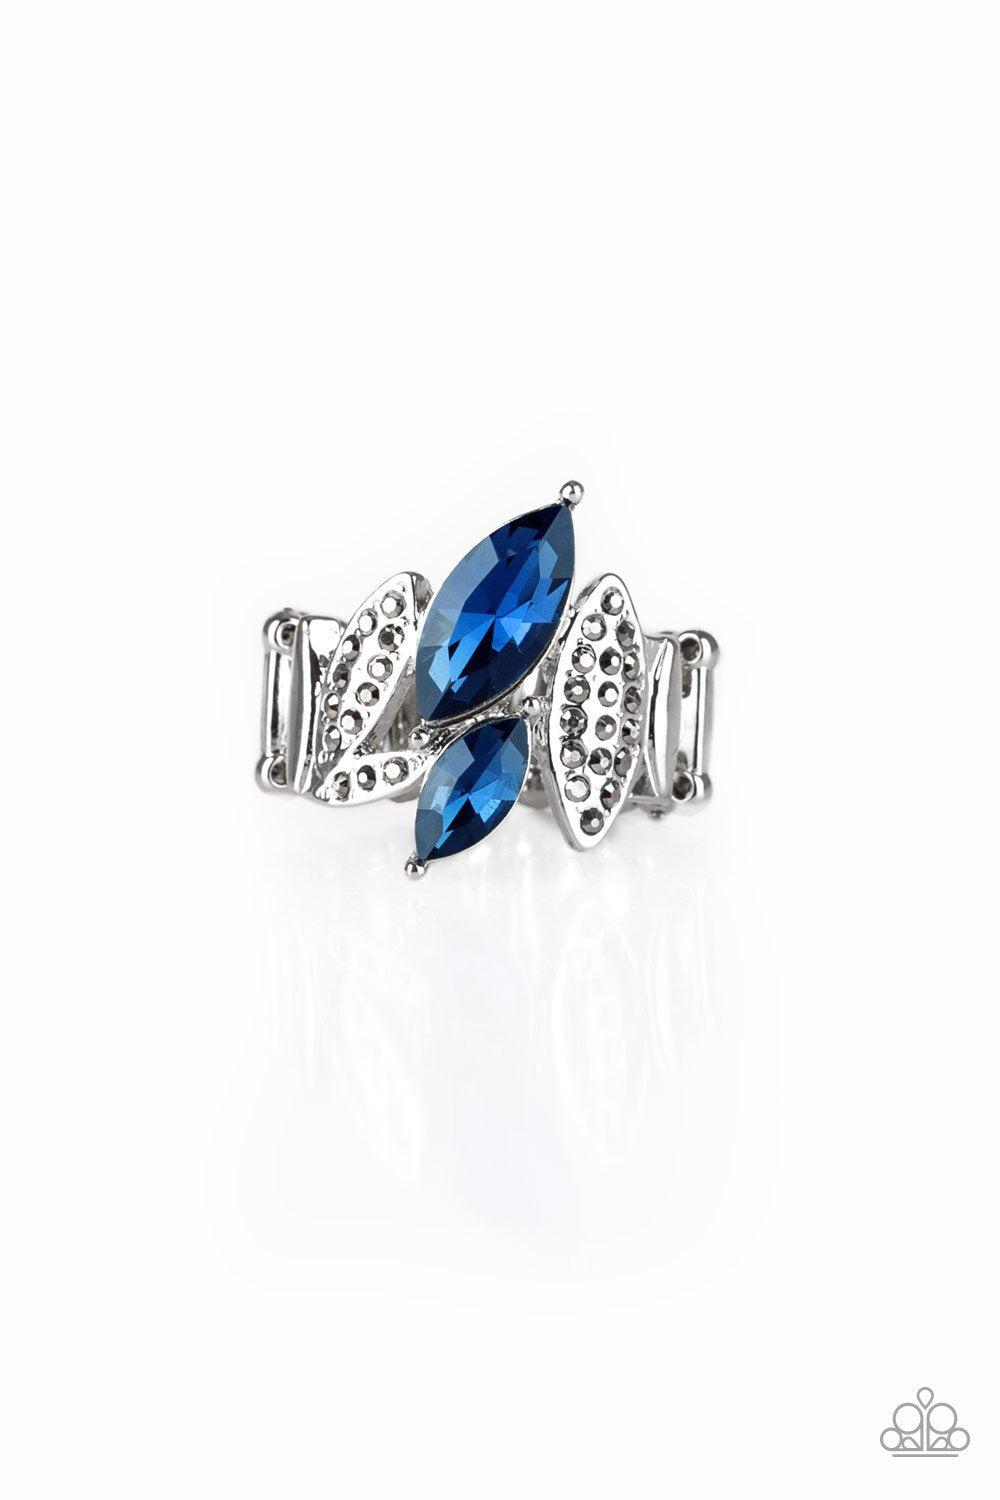 Stay Sassy Blue Rhinestone Ring - Paparazzi Accessories-CarasShop.com - $5 Jewelry by Cara Jewels